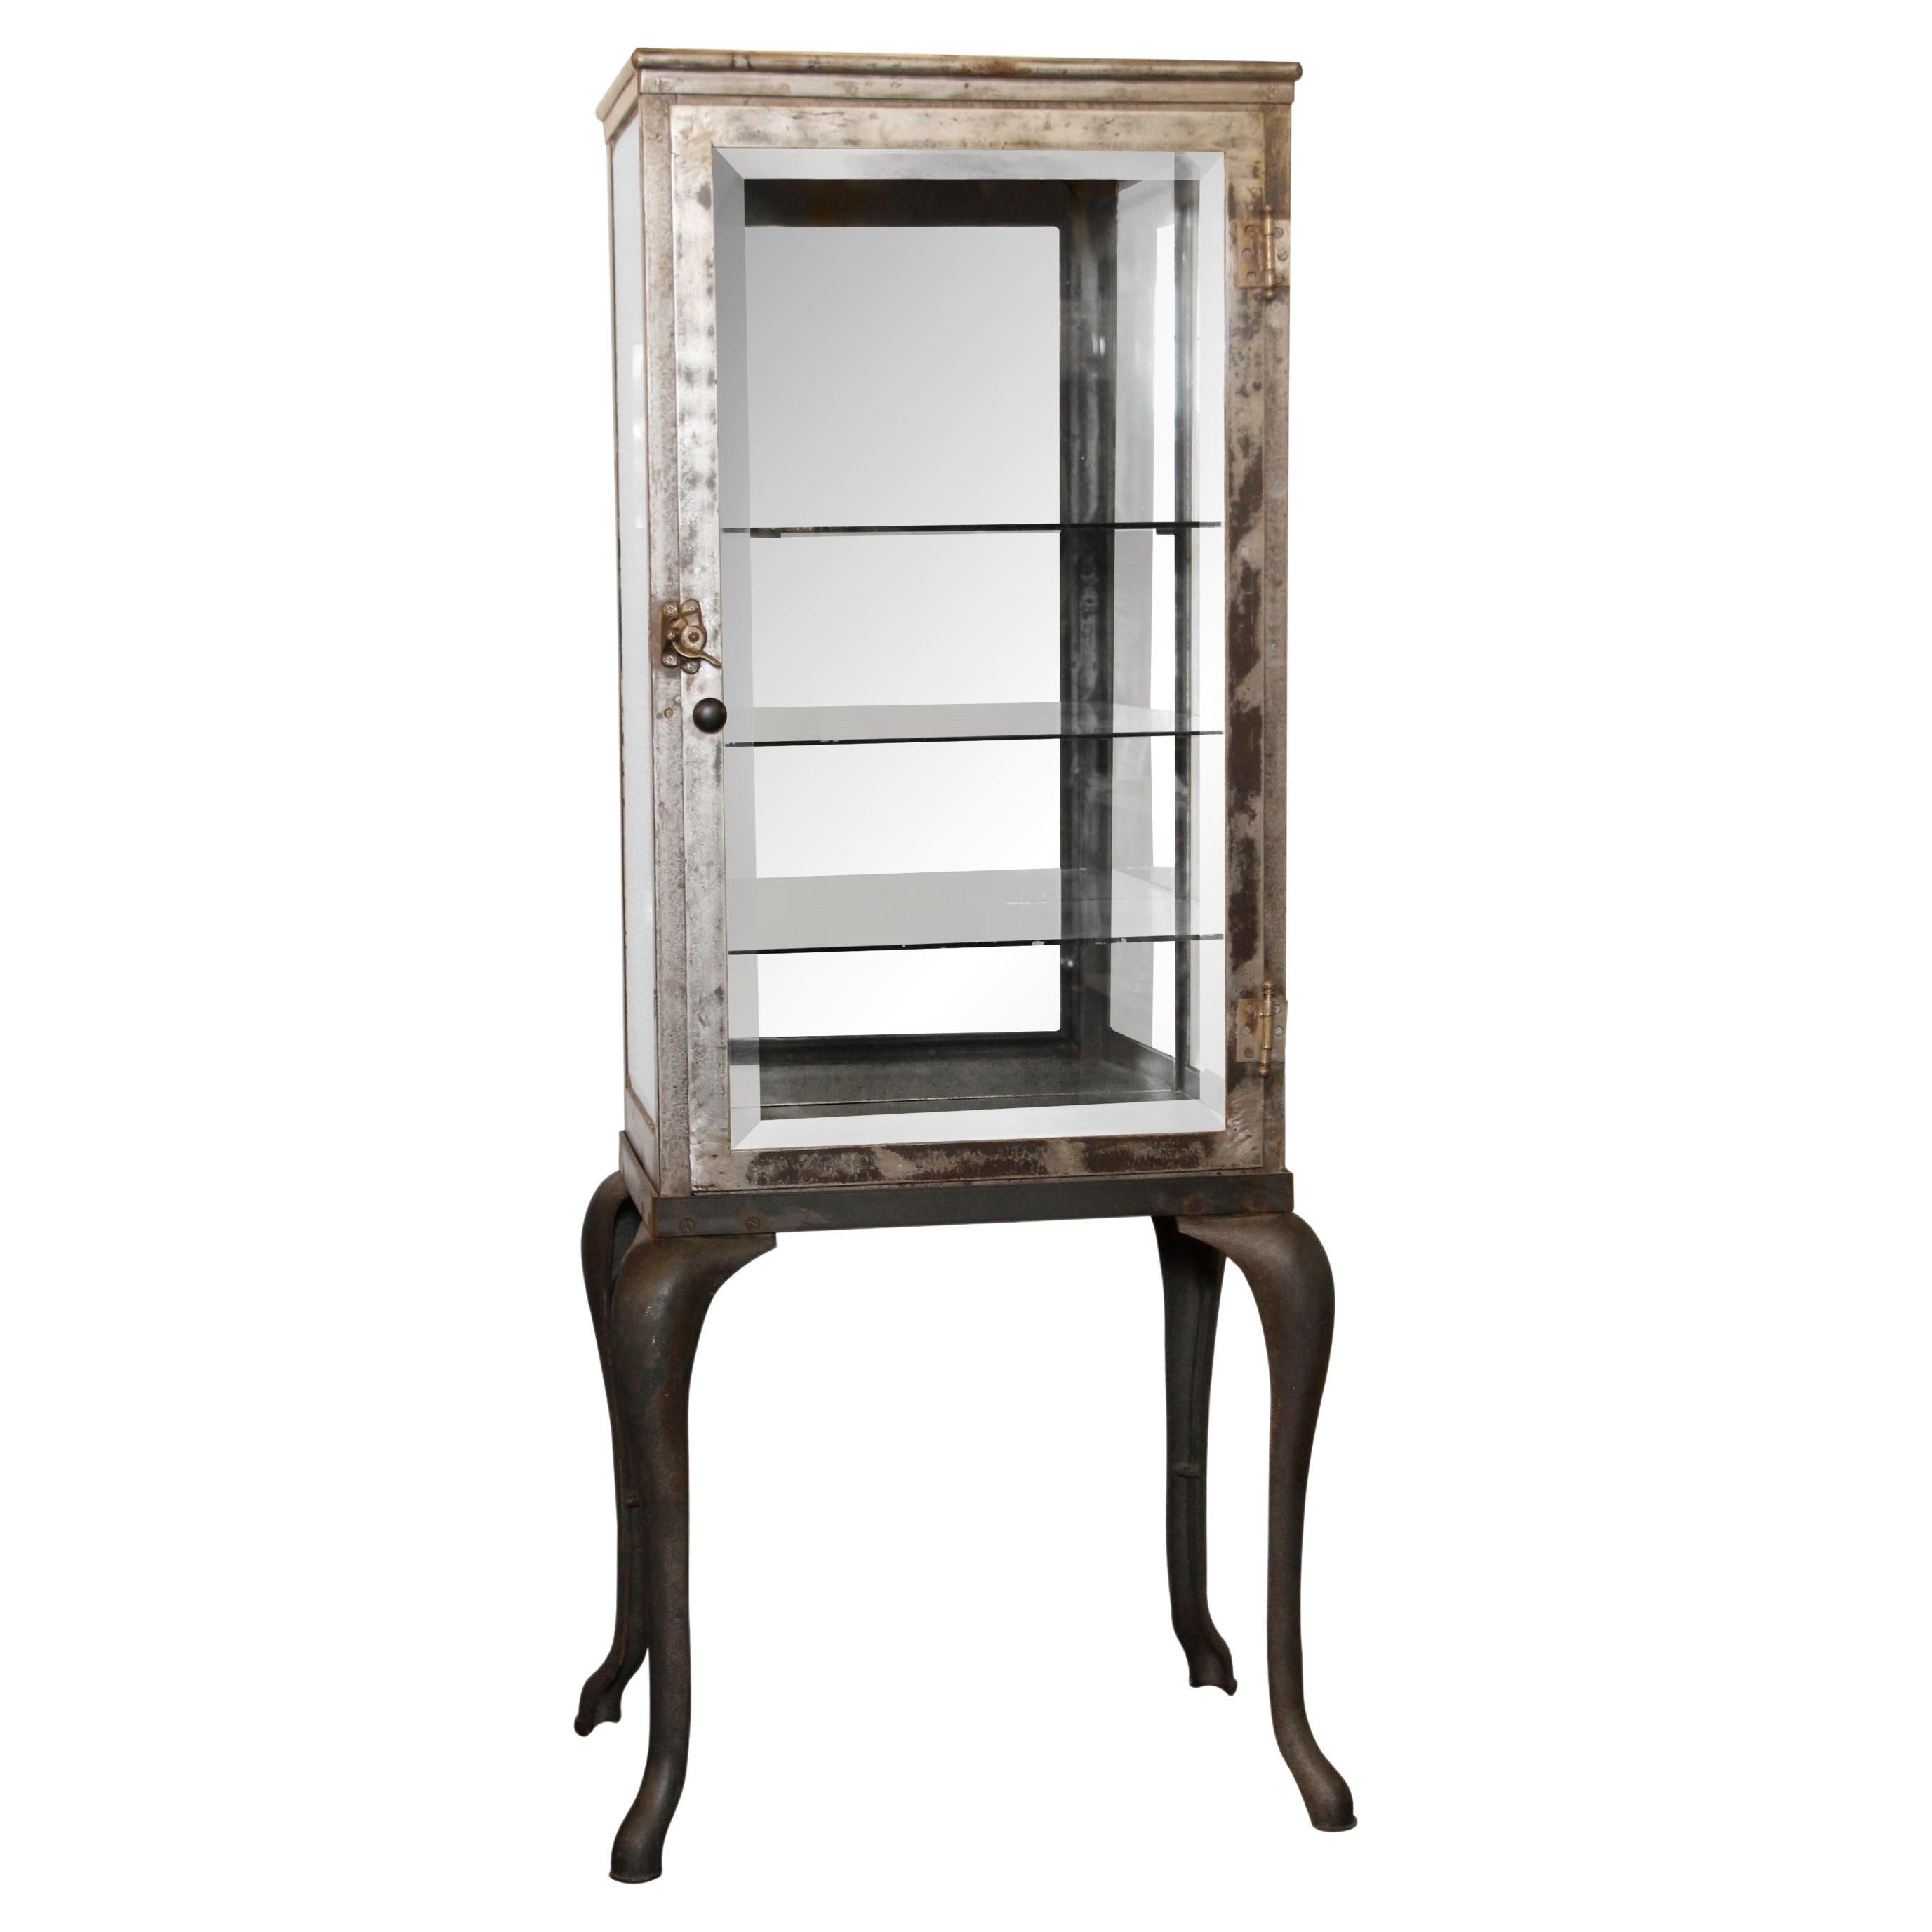 1800s Steel Medical Dental Cabinet Cabriole Legs Mirror Back Three Glass Shelves